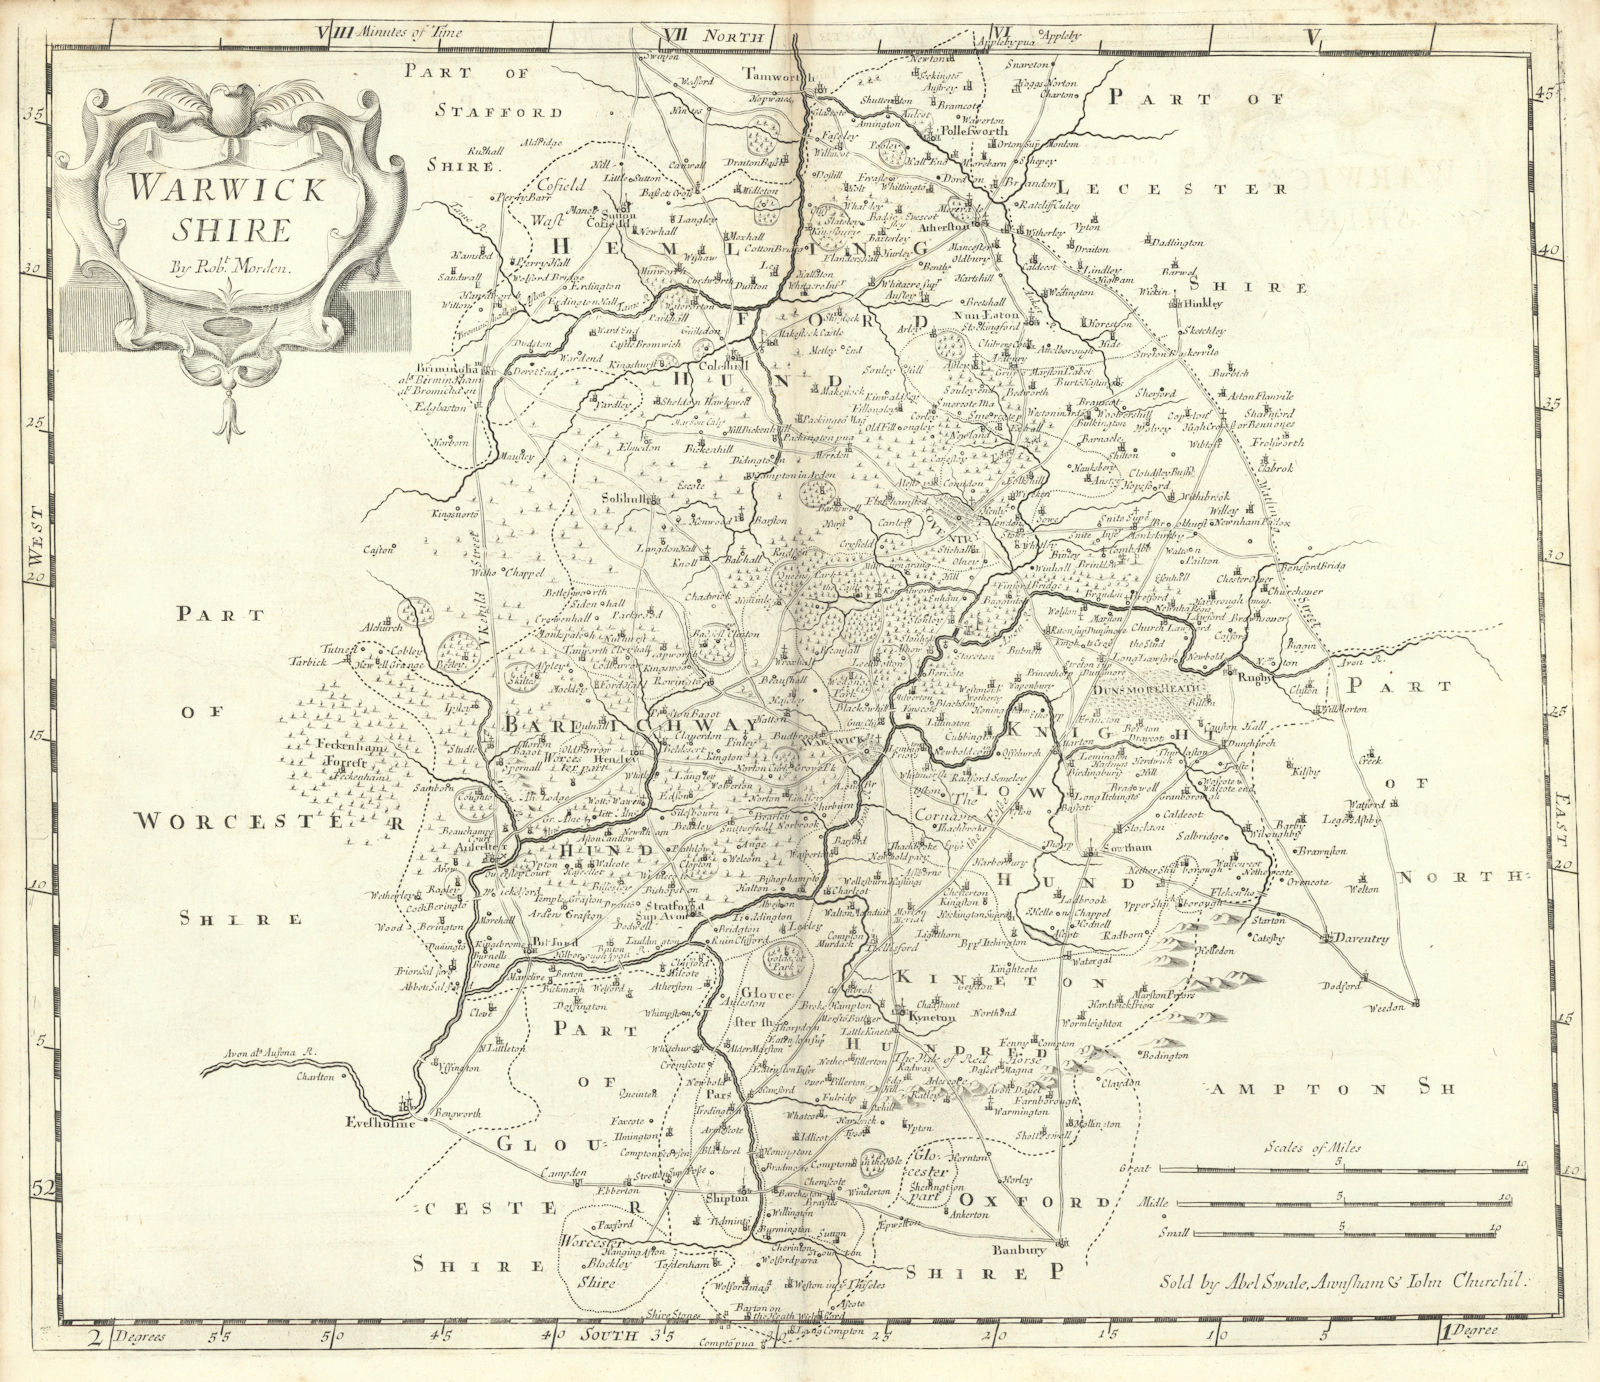 Warwickshire. 'WARWICK SHIRE' by ROBERT MORDEN from Camden's Britannia 1722 map